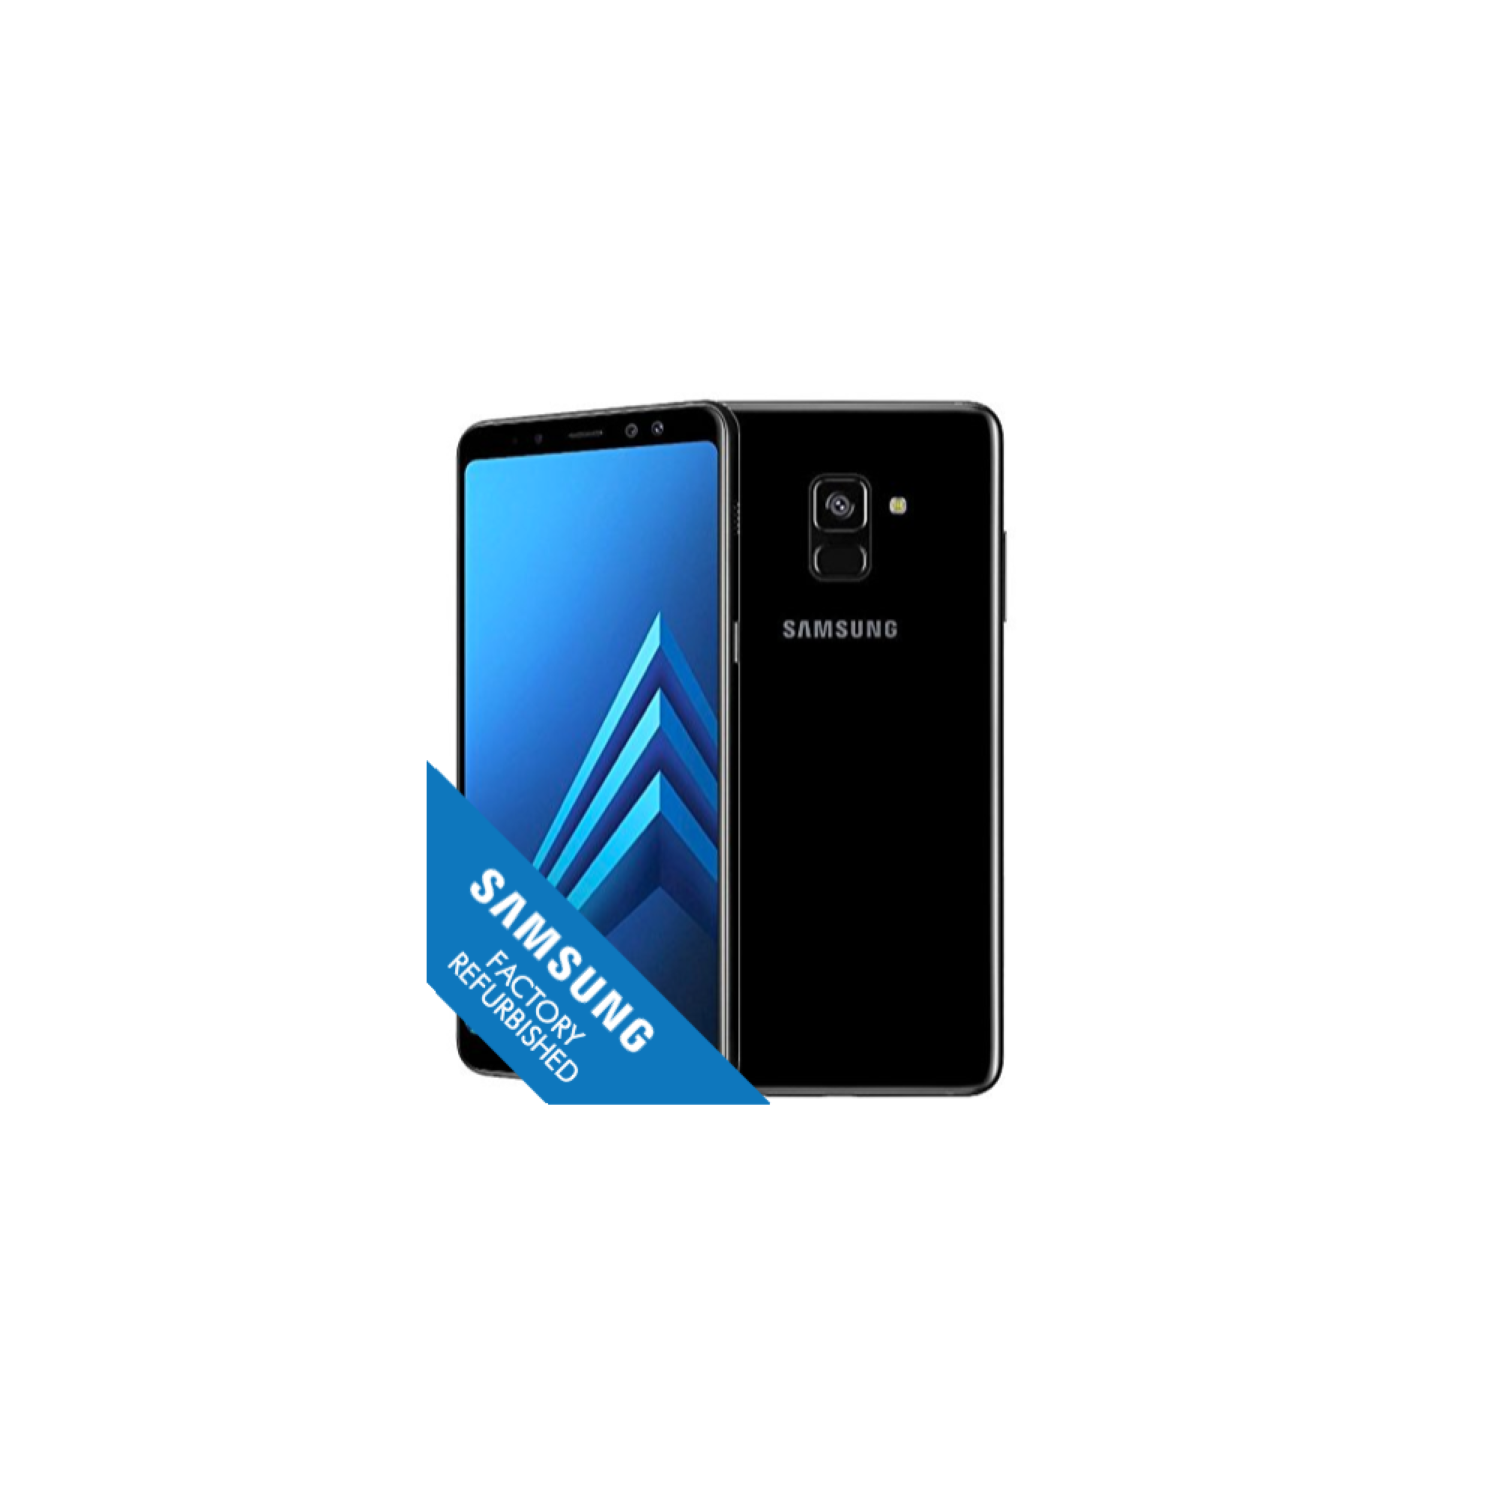 Refurbished (Excellent) - Samsung Galaxy A8 Black Unlocked Samsung Certified Factory Refurbished